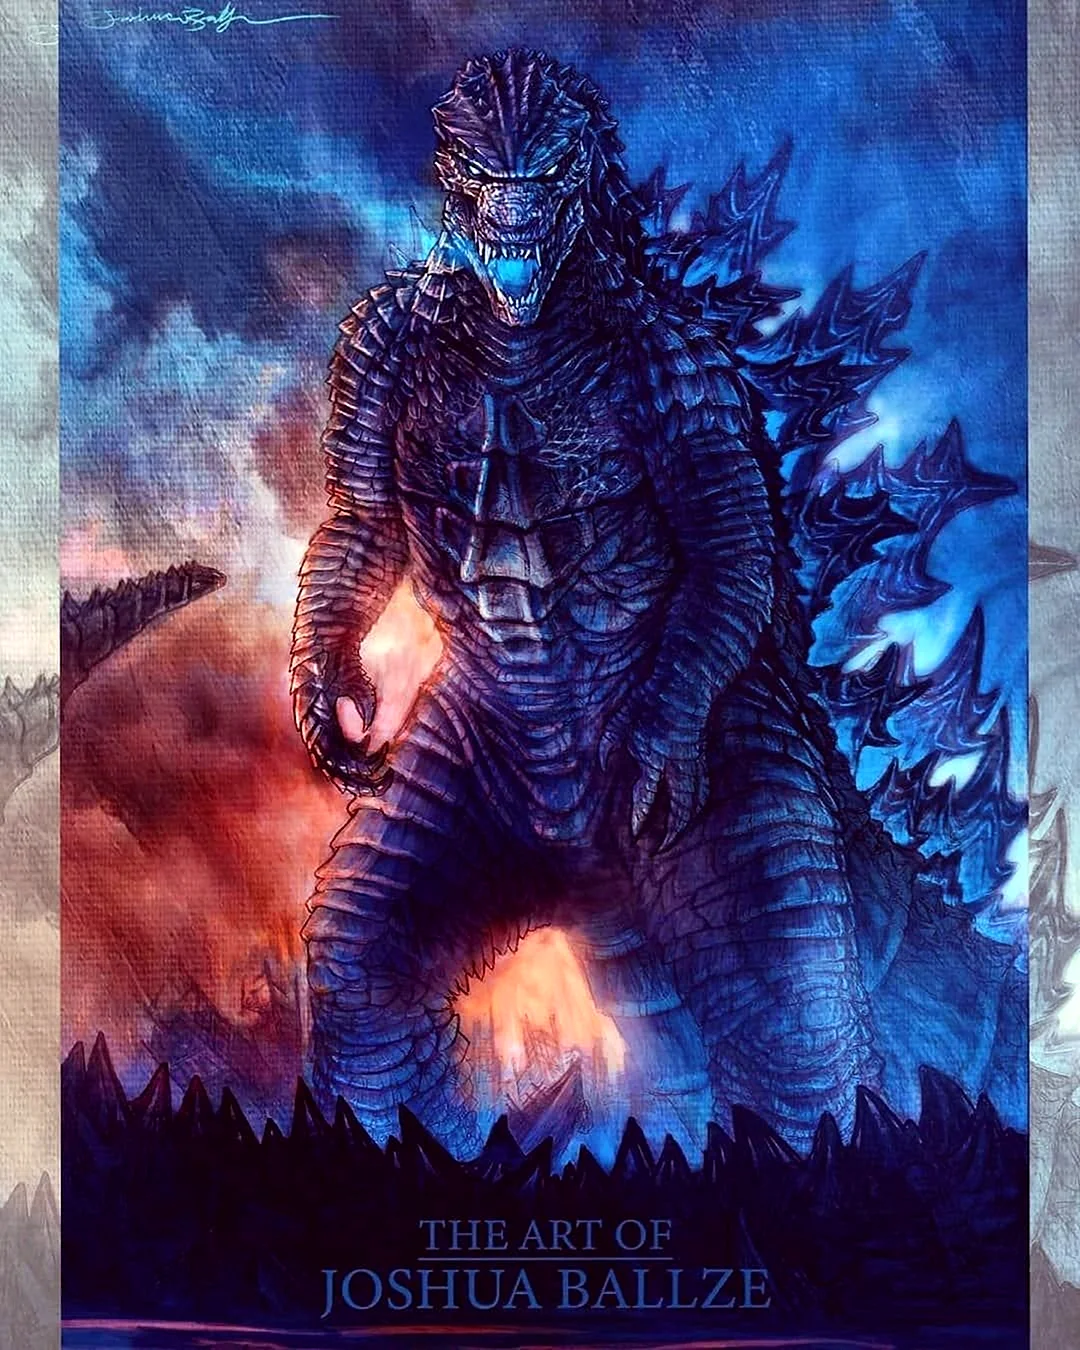 Godzilla 2014 Art Wallpaper For iPhone